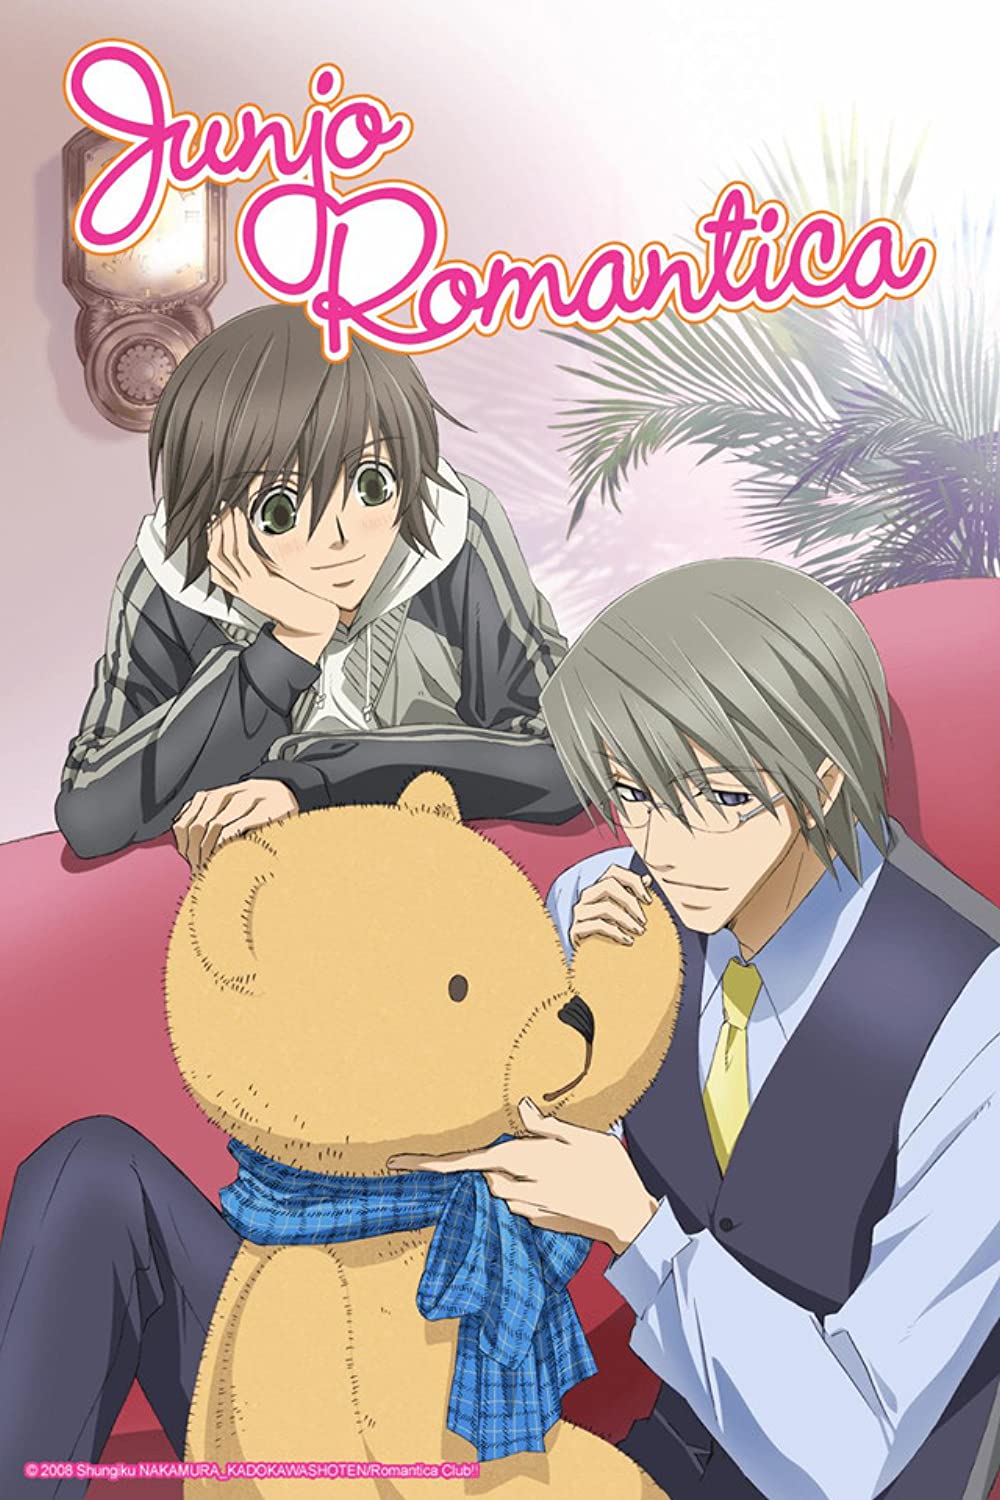 Best Boys Love Anime - Junjou Romantica